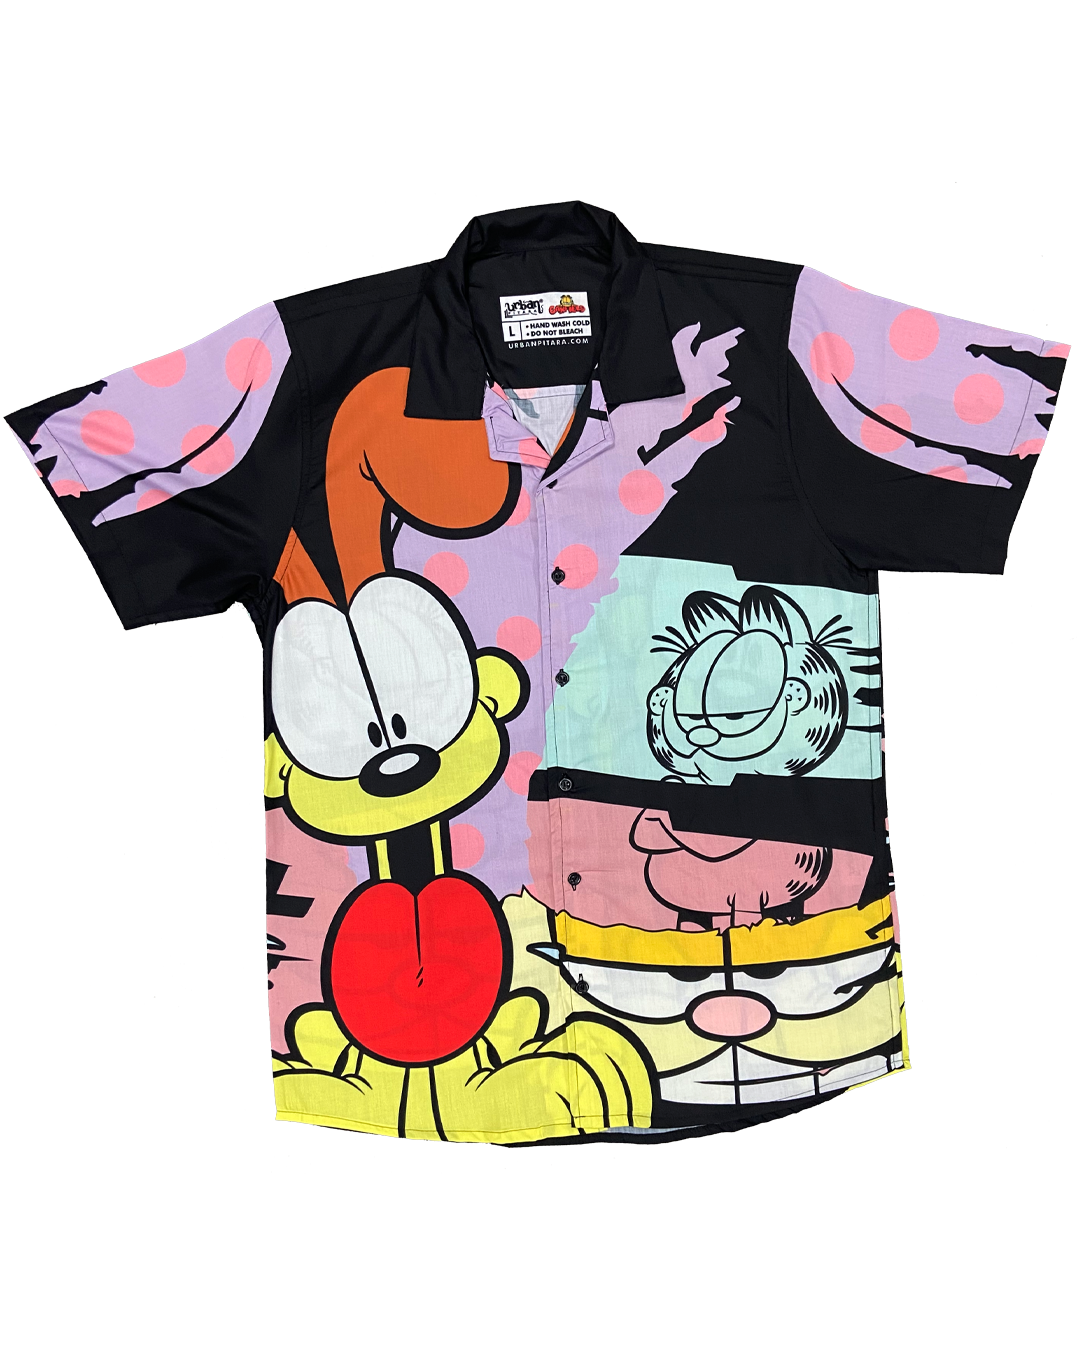 Garfield & Odie Shirt